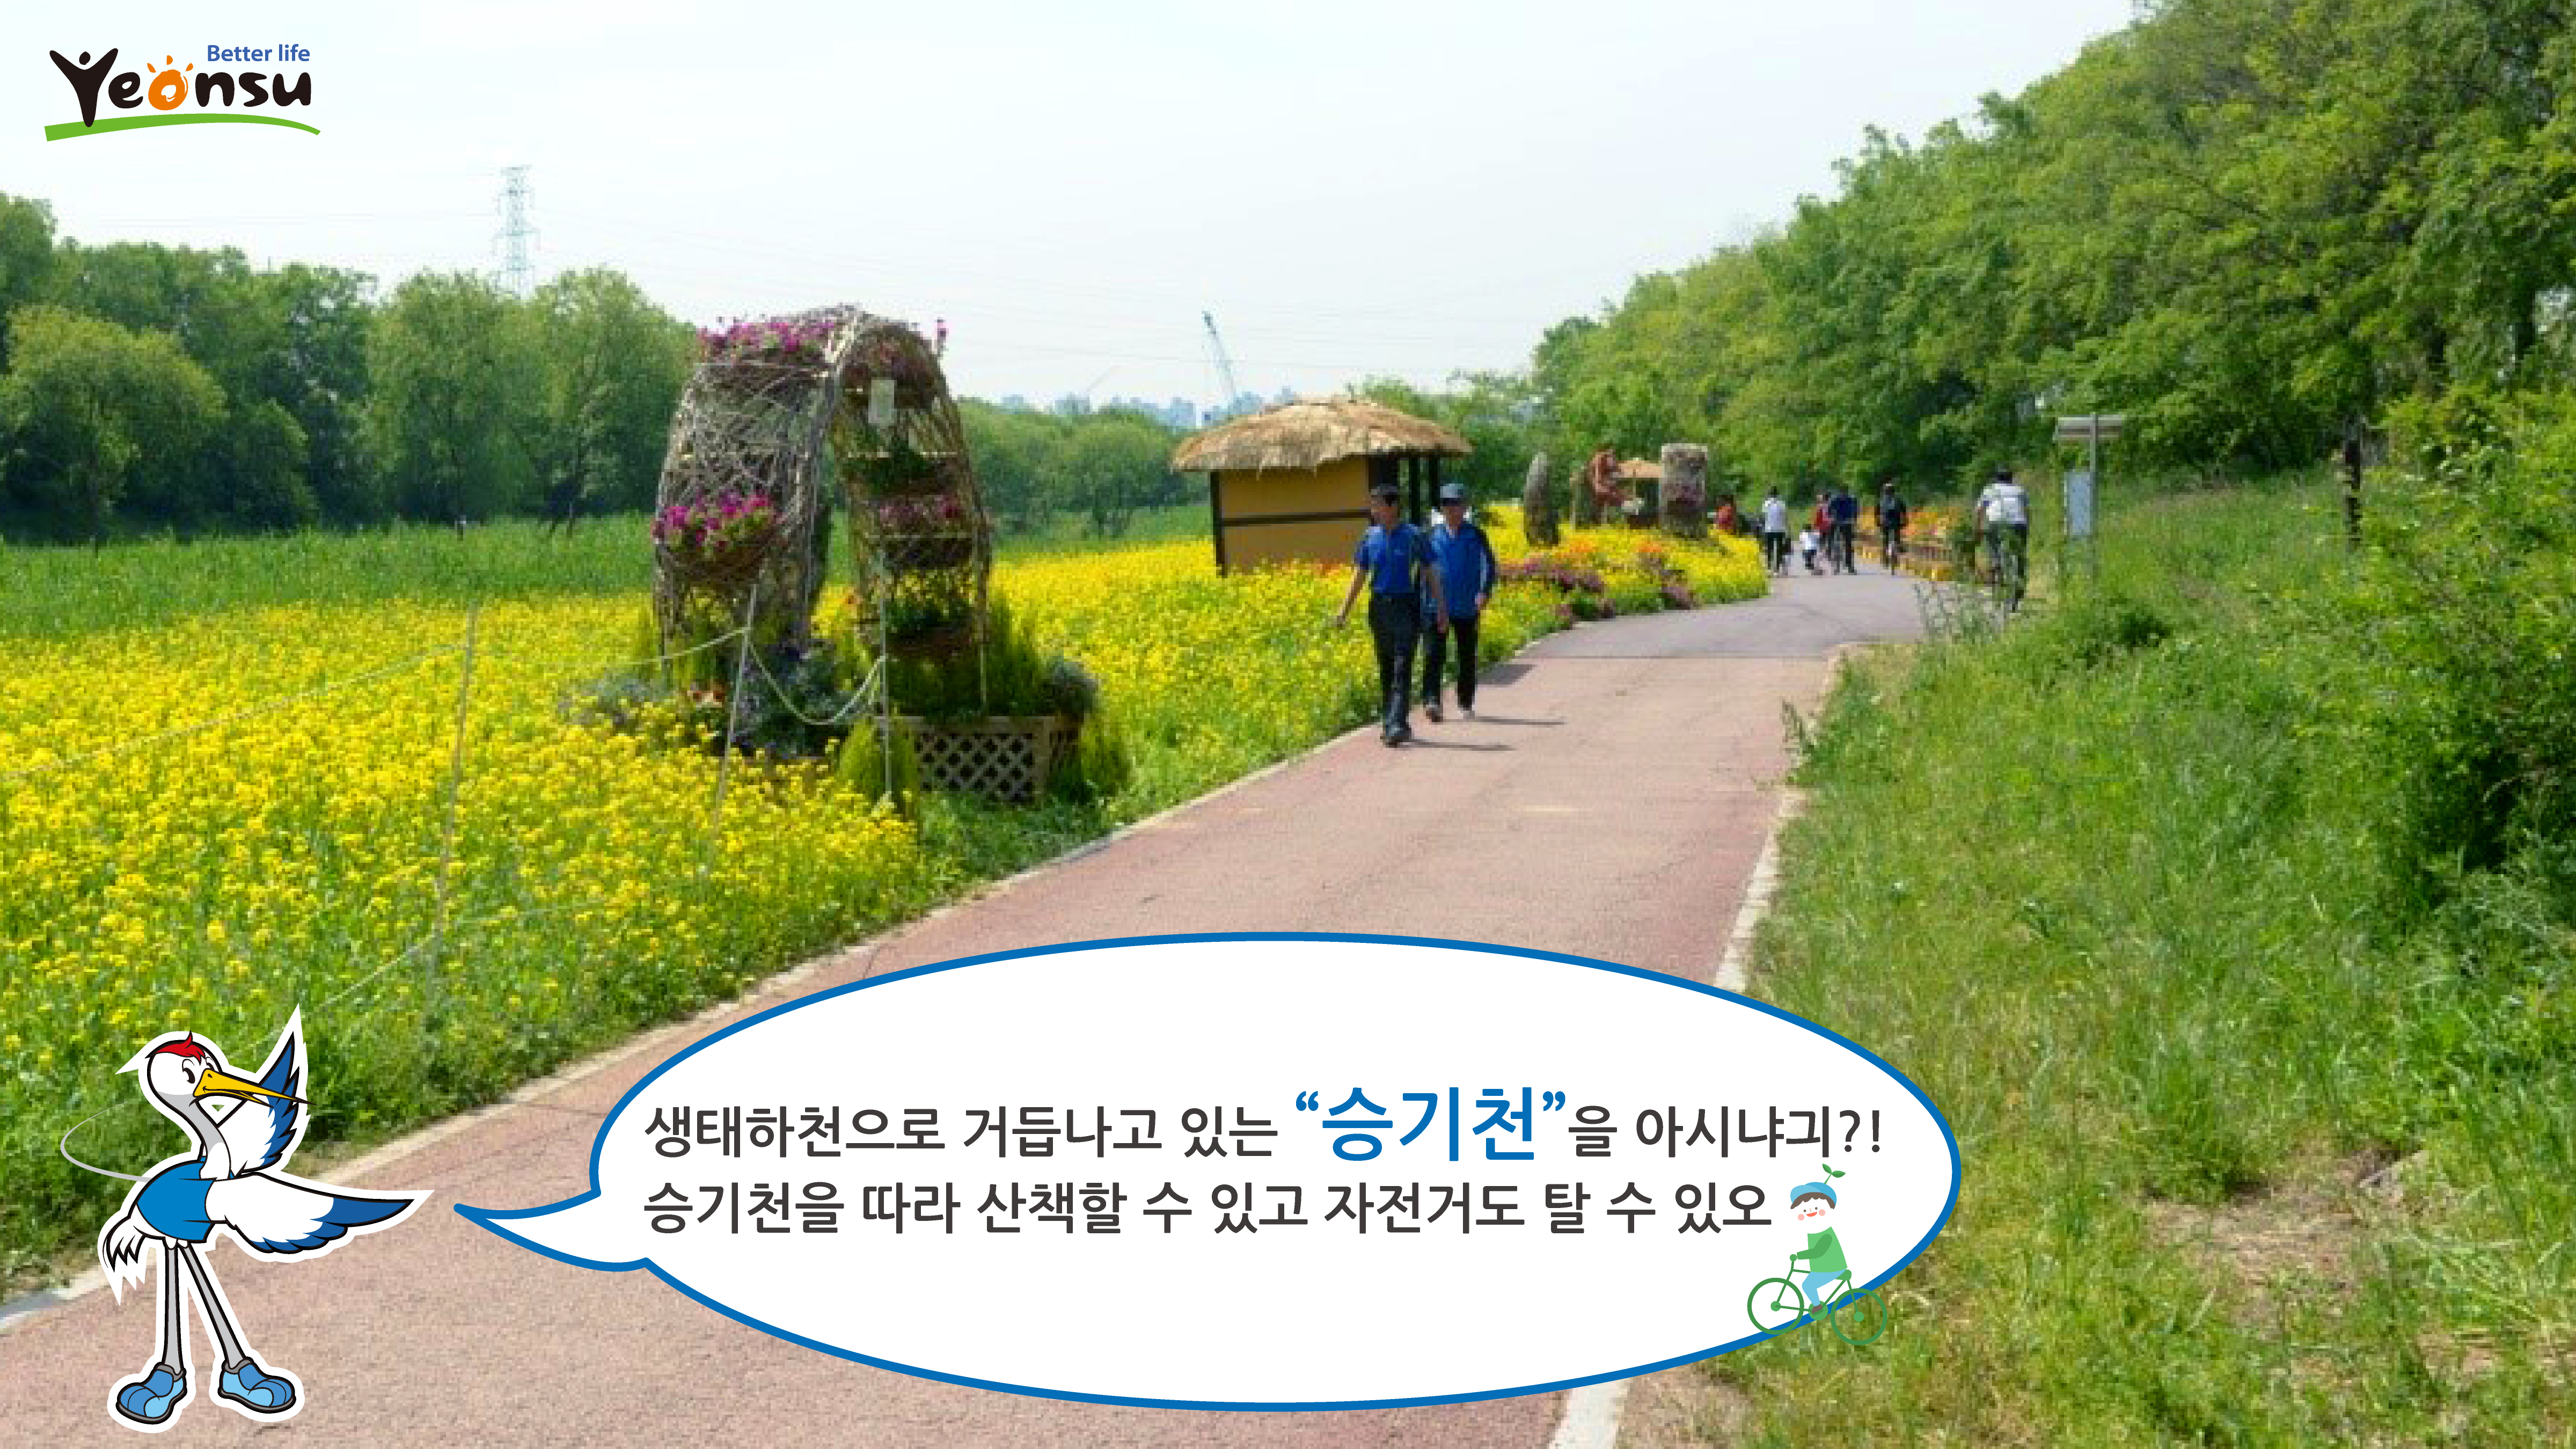 Better life Yeonsu
생태하천으로 거듭나고 있는 '승기천'을 아시냐긔?
승기천을 따라 산책할 수 있고 자전거도 탈 수 있오